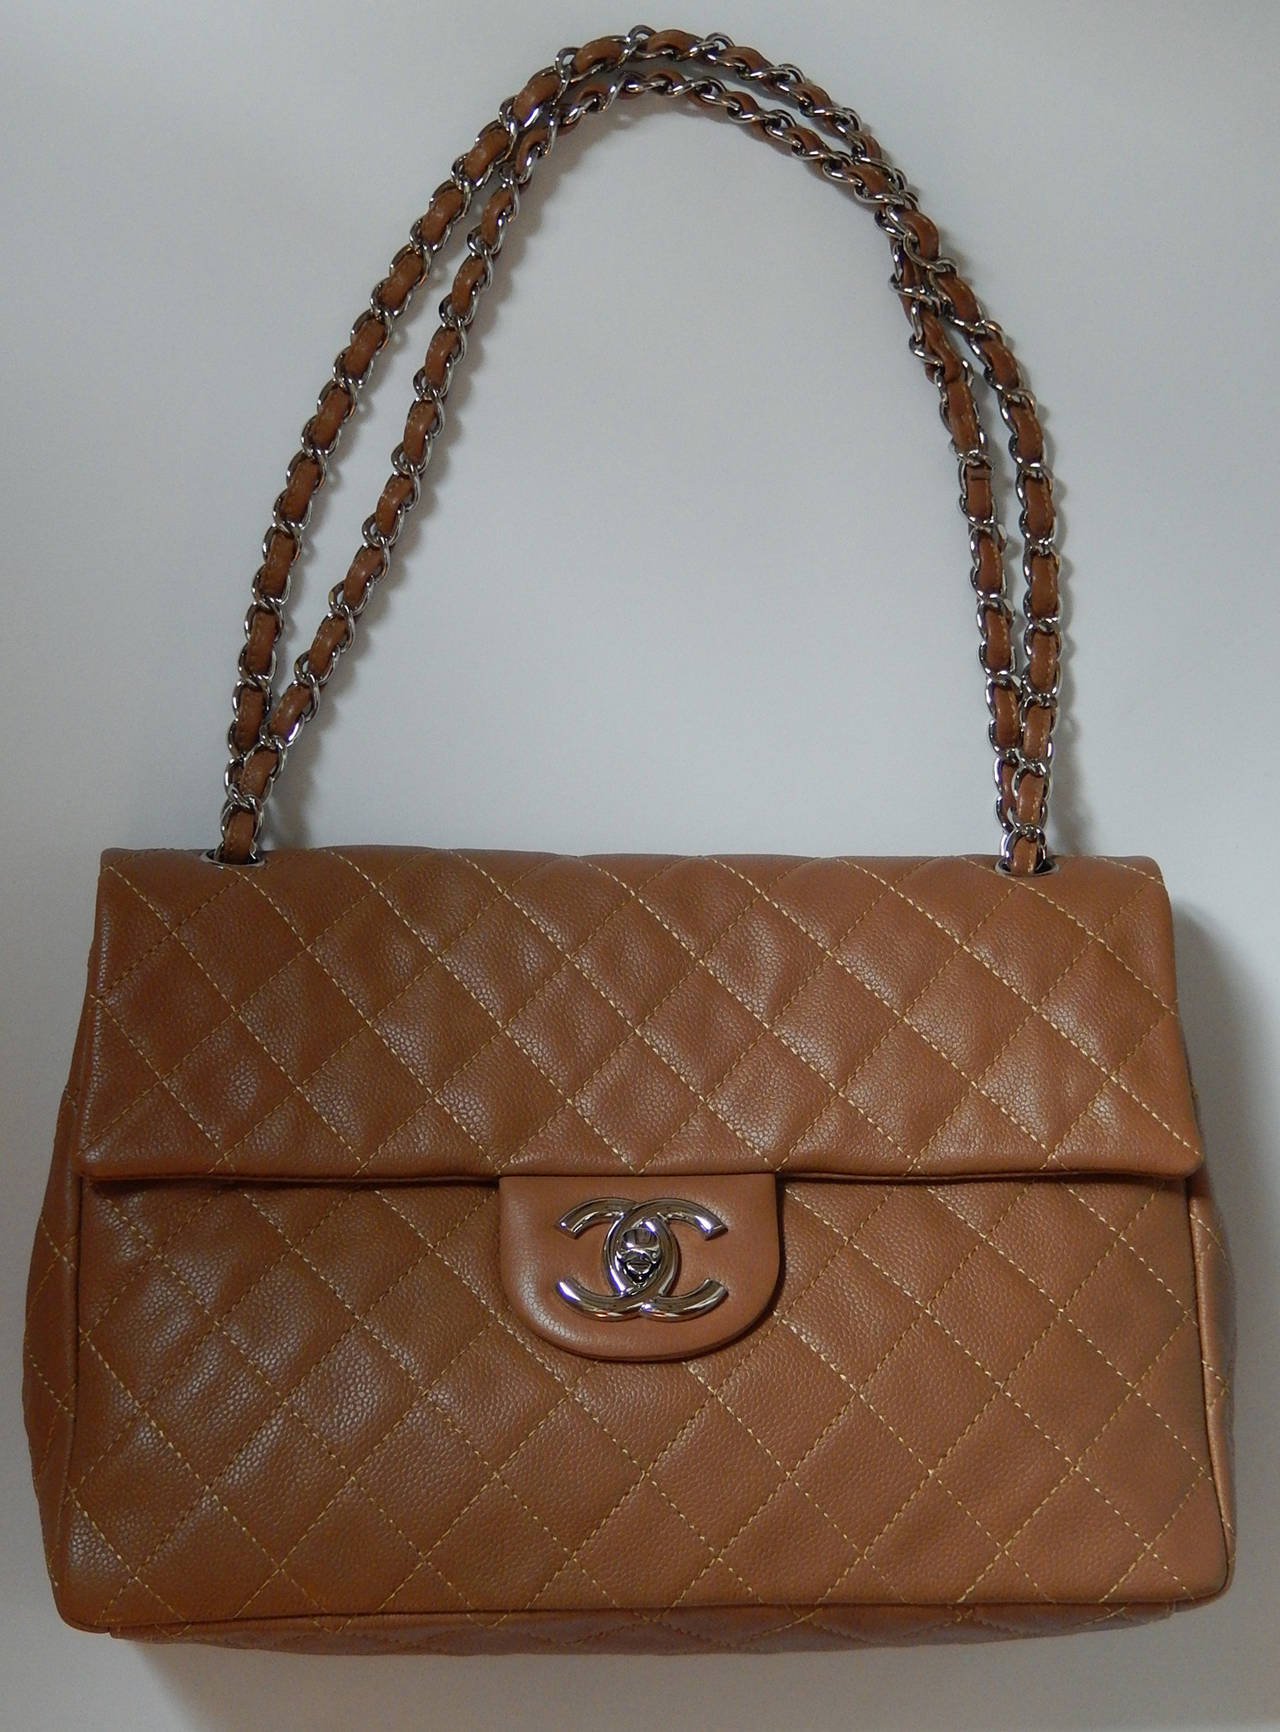 Chanel single Flap Soft Caviar Leather Maxi Flap Bag
Measures 13' b 9